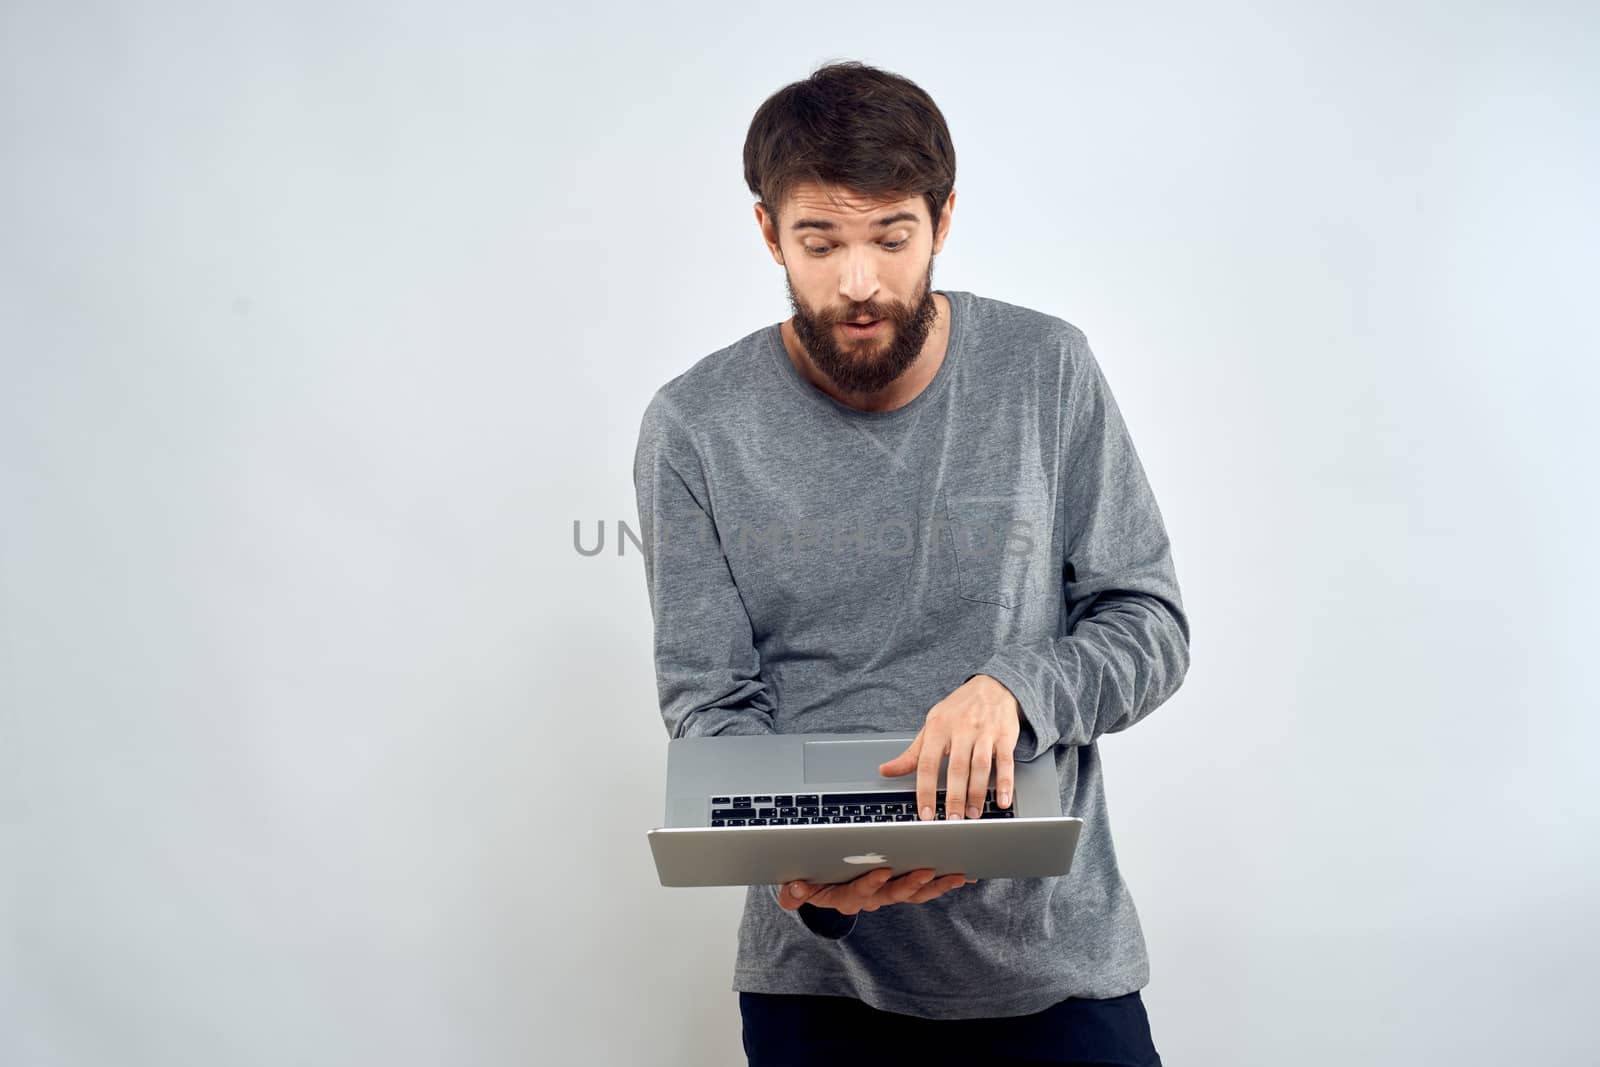 A man holding a laptop internet communication lifestyle technology light background studio. High quality photo